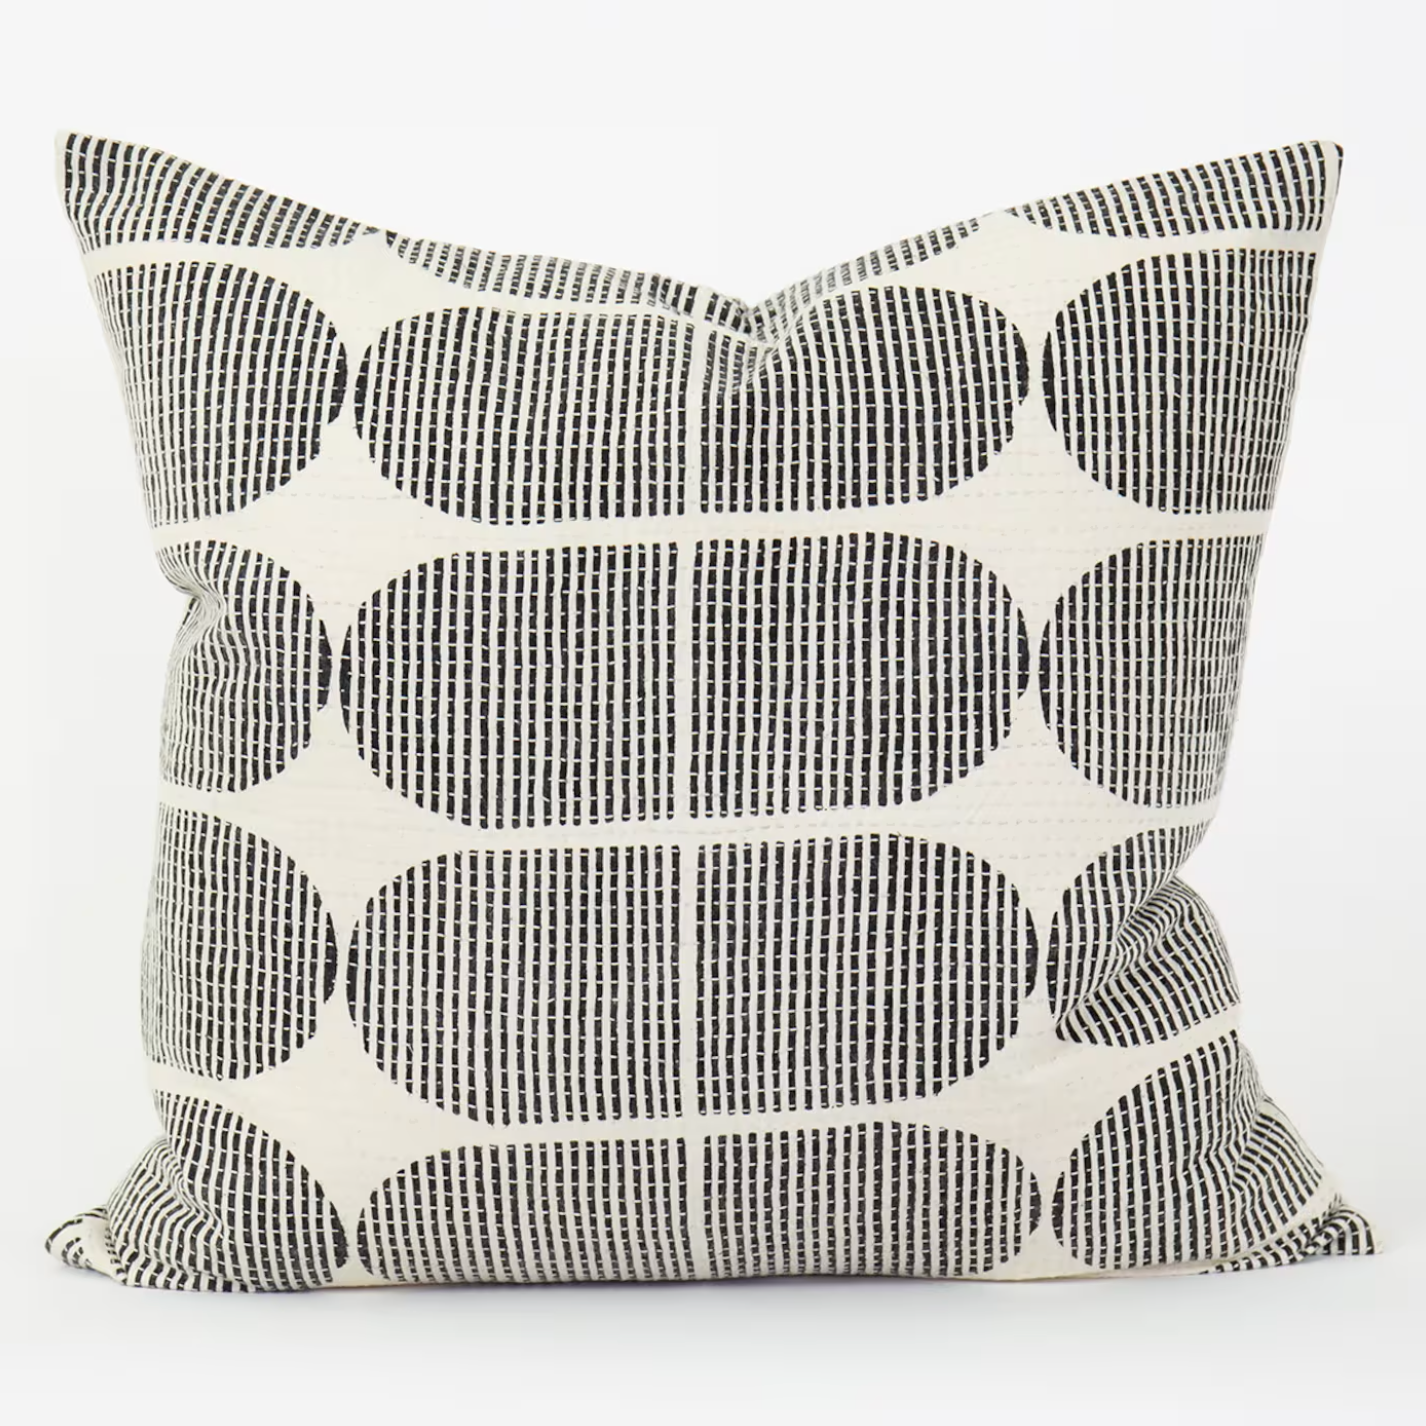 Cushion cover Tile, 50x50cm in White / Black